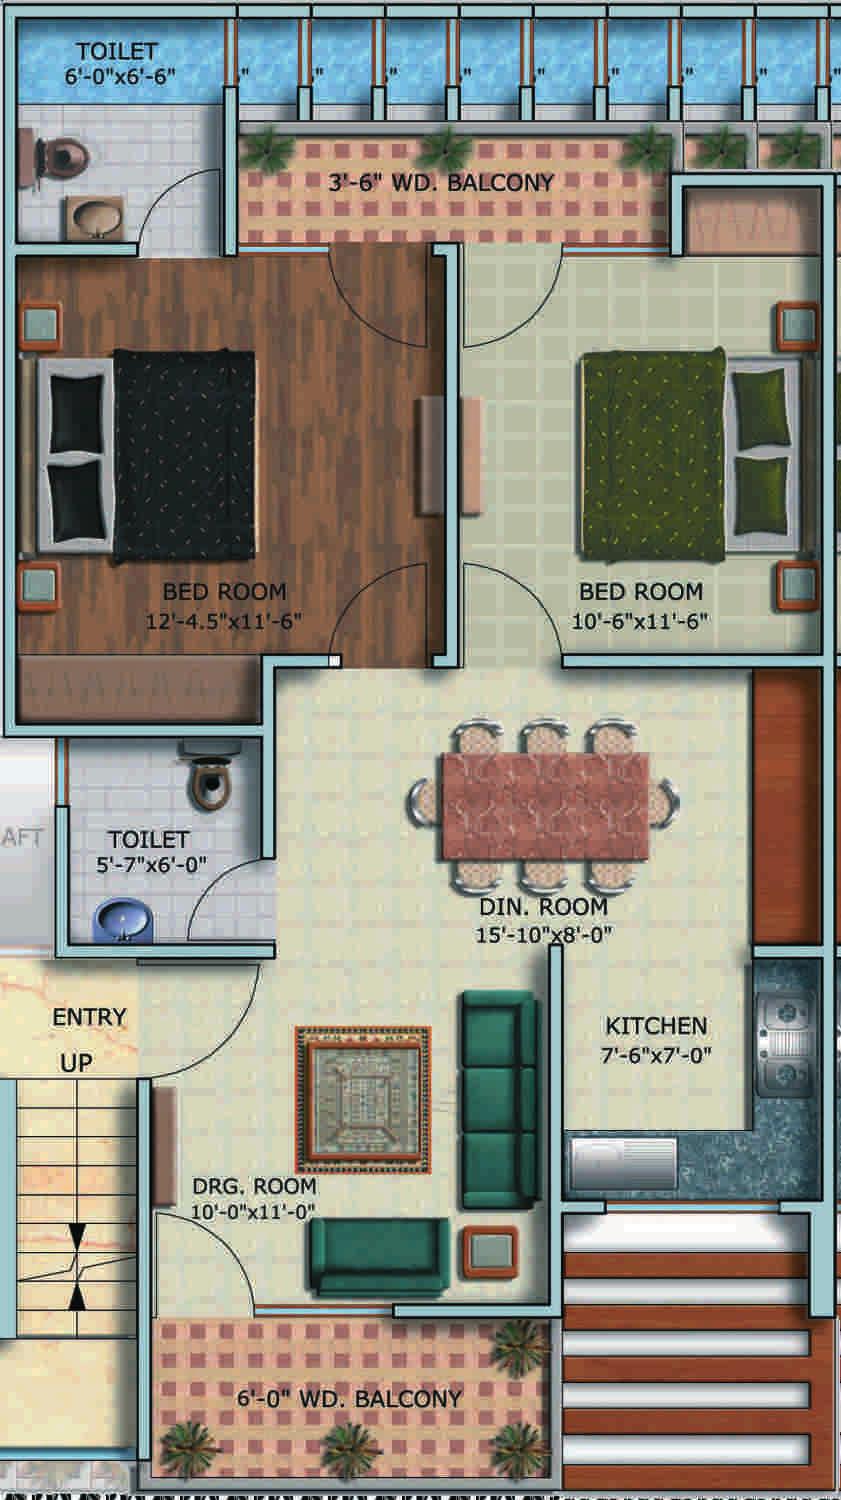 Kitchen + 2 Toilets + 2 Balconies Ground Floor Plan - 1145